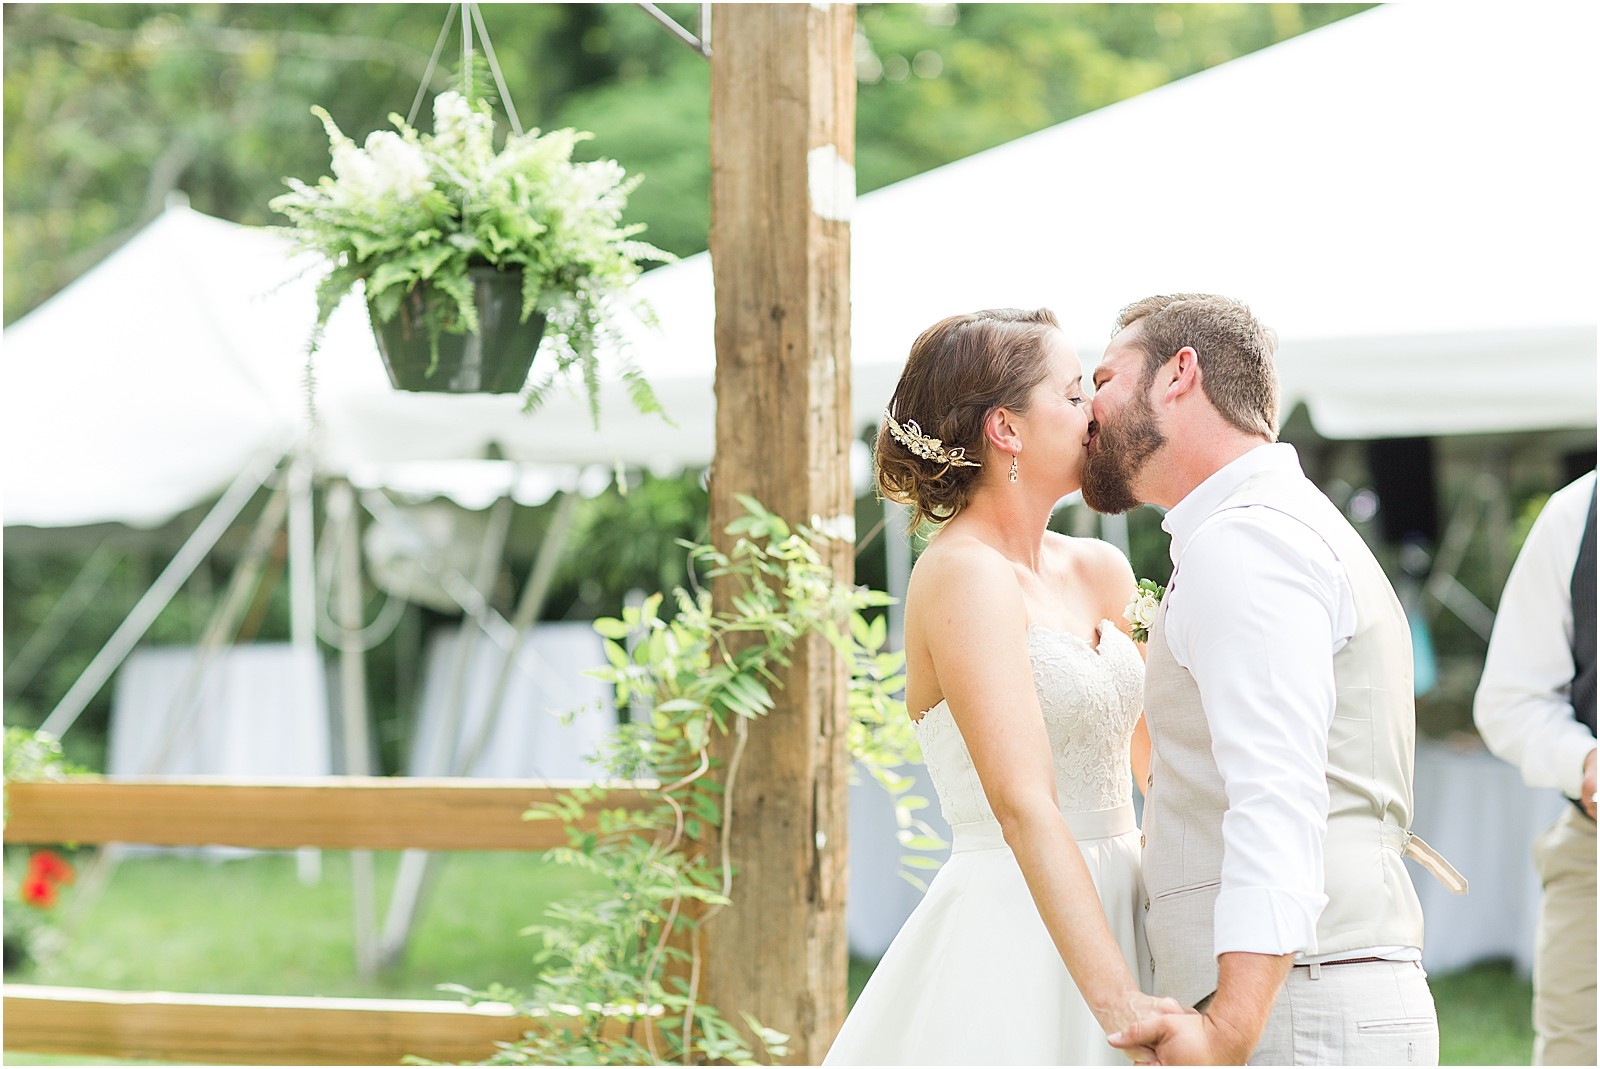 A Evansville Indiana Backyard Wedding | Bailey and Ben 068.jpg